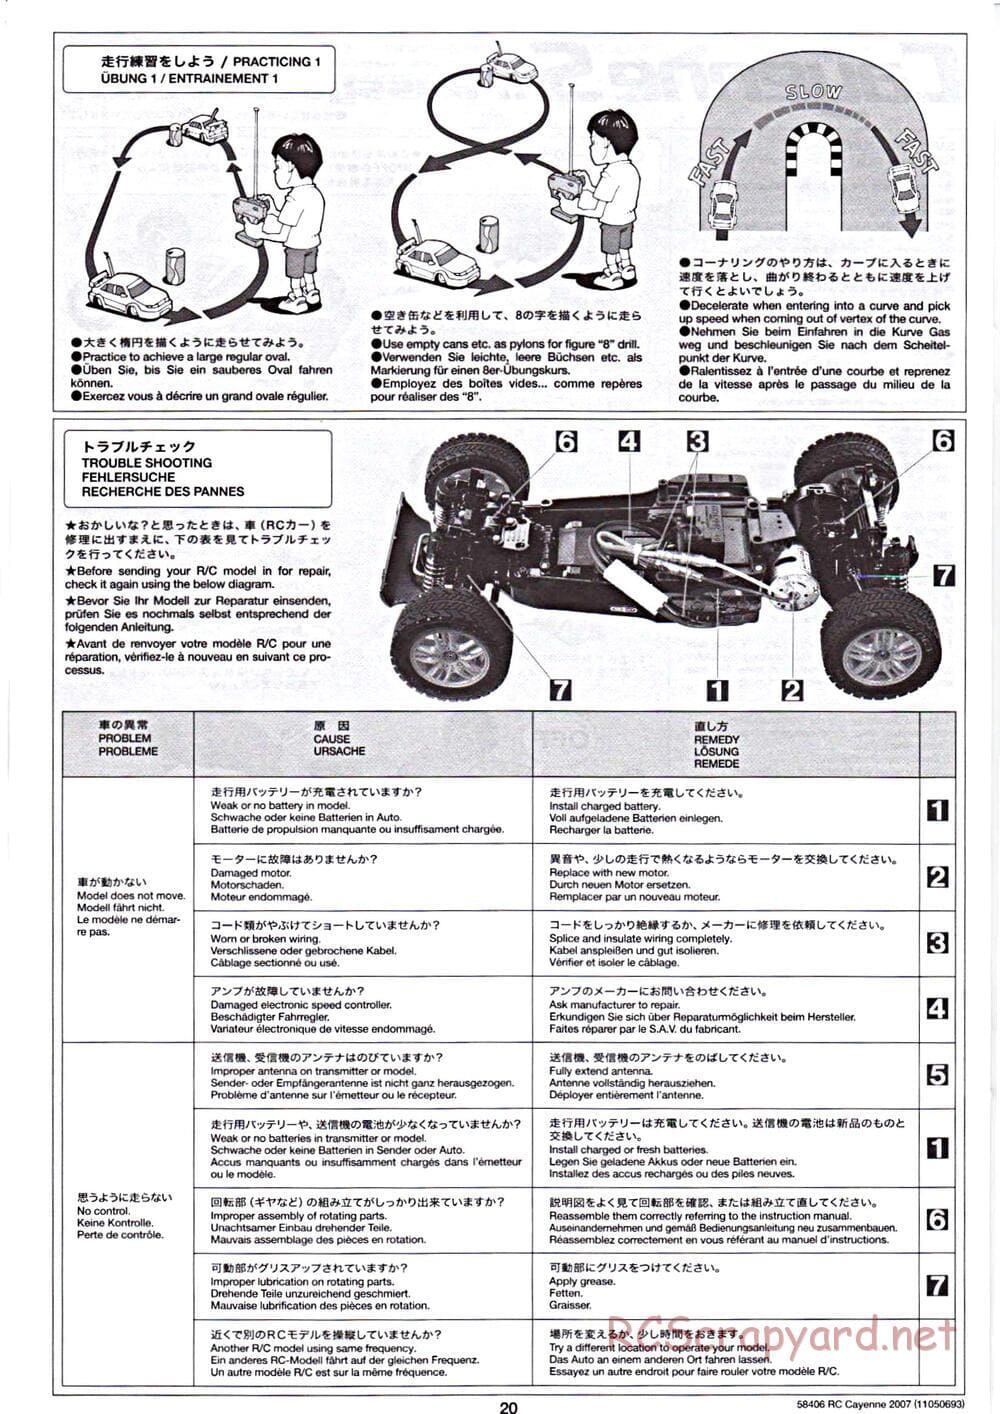 Tamiya - Cayenne S Transsyberia 2007 Chassis - Manual - Page 20